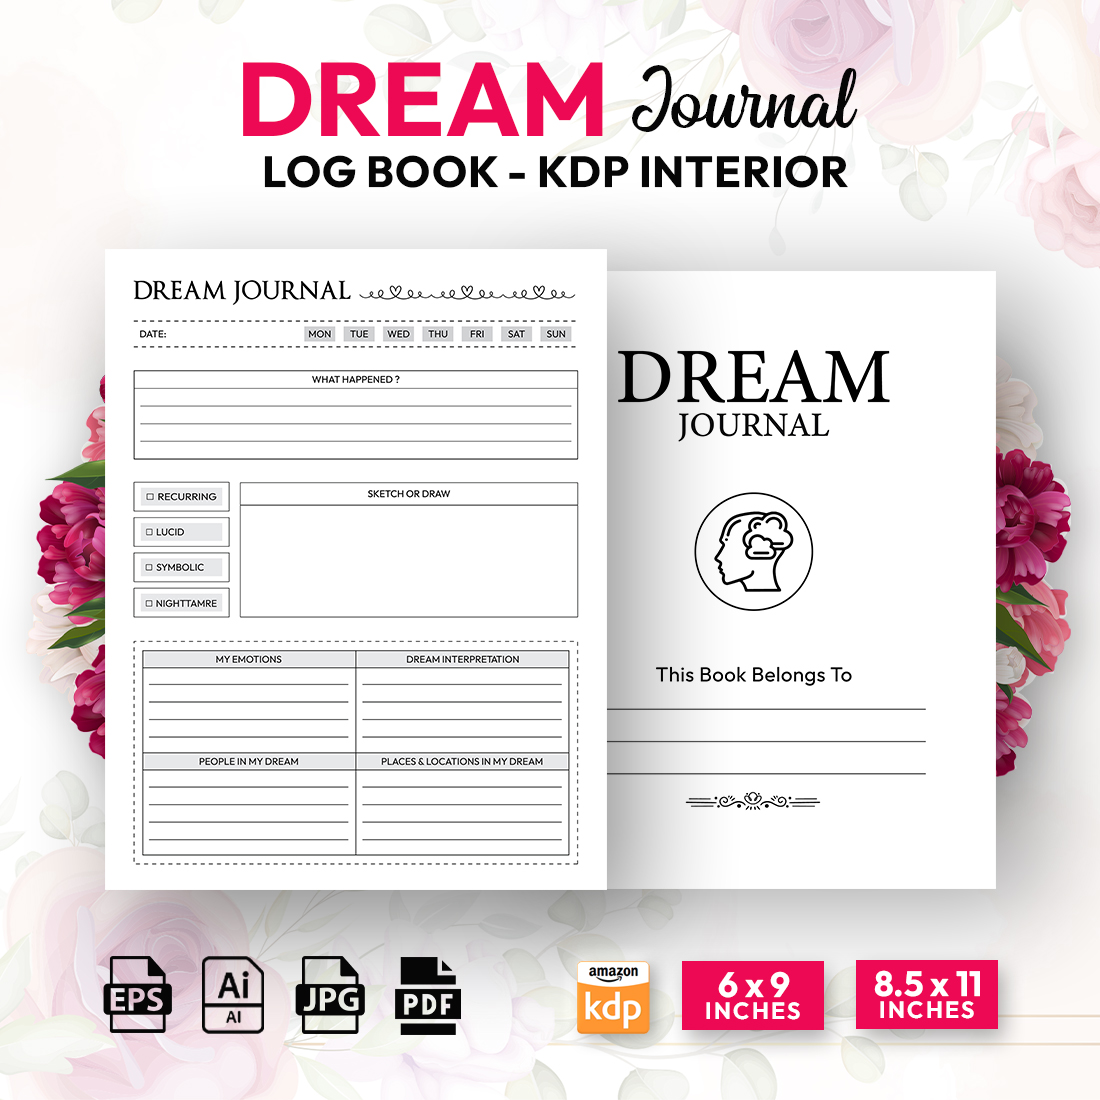 Dream Journal Planner Logbook – KDP Interior cover image.